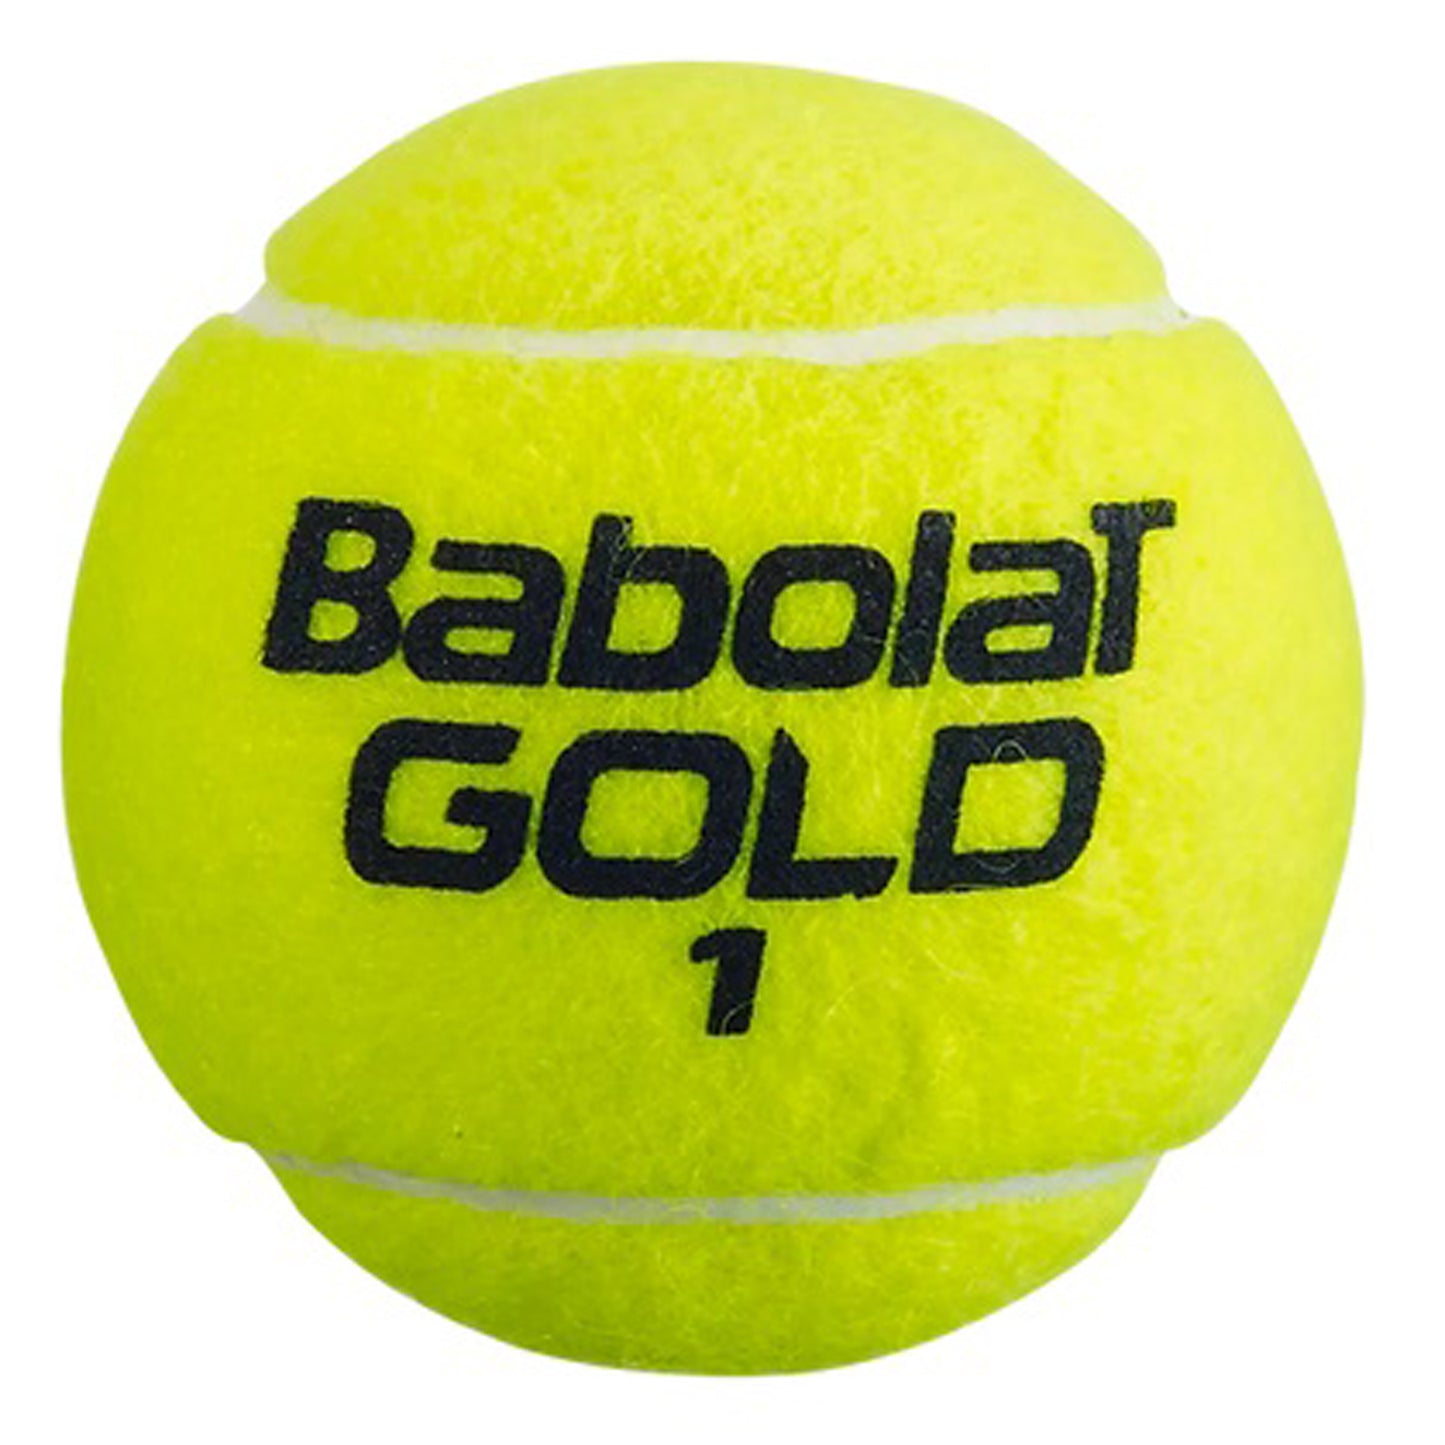 Babolat Gold Championship X3 Tennis Balls Dozen (4 Cans) - Best Price online Prokicksports.com